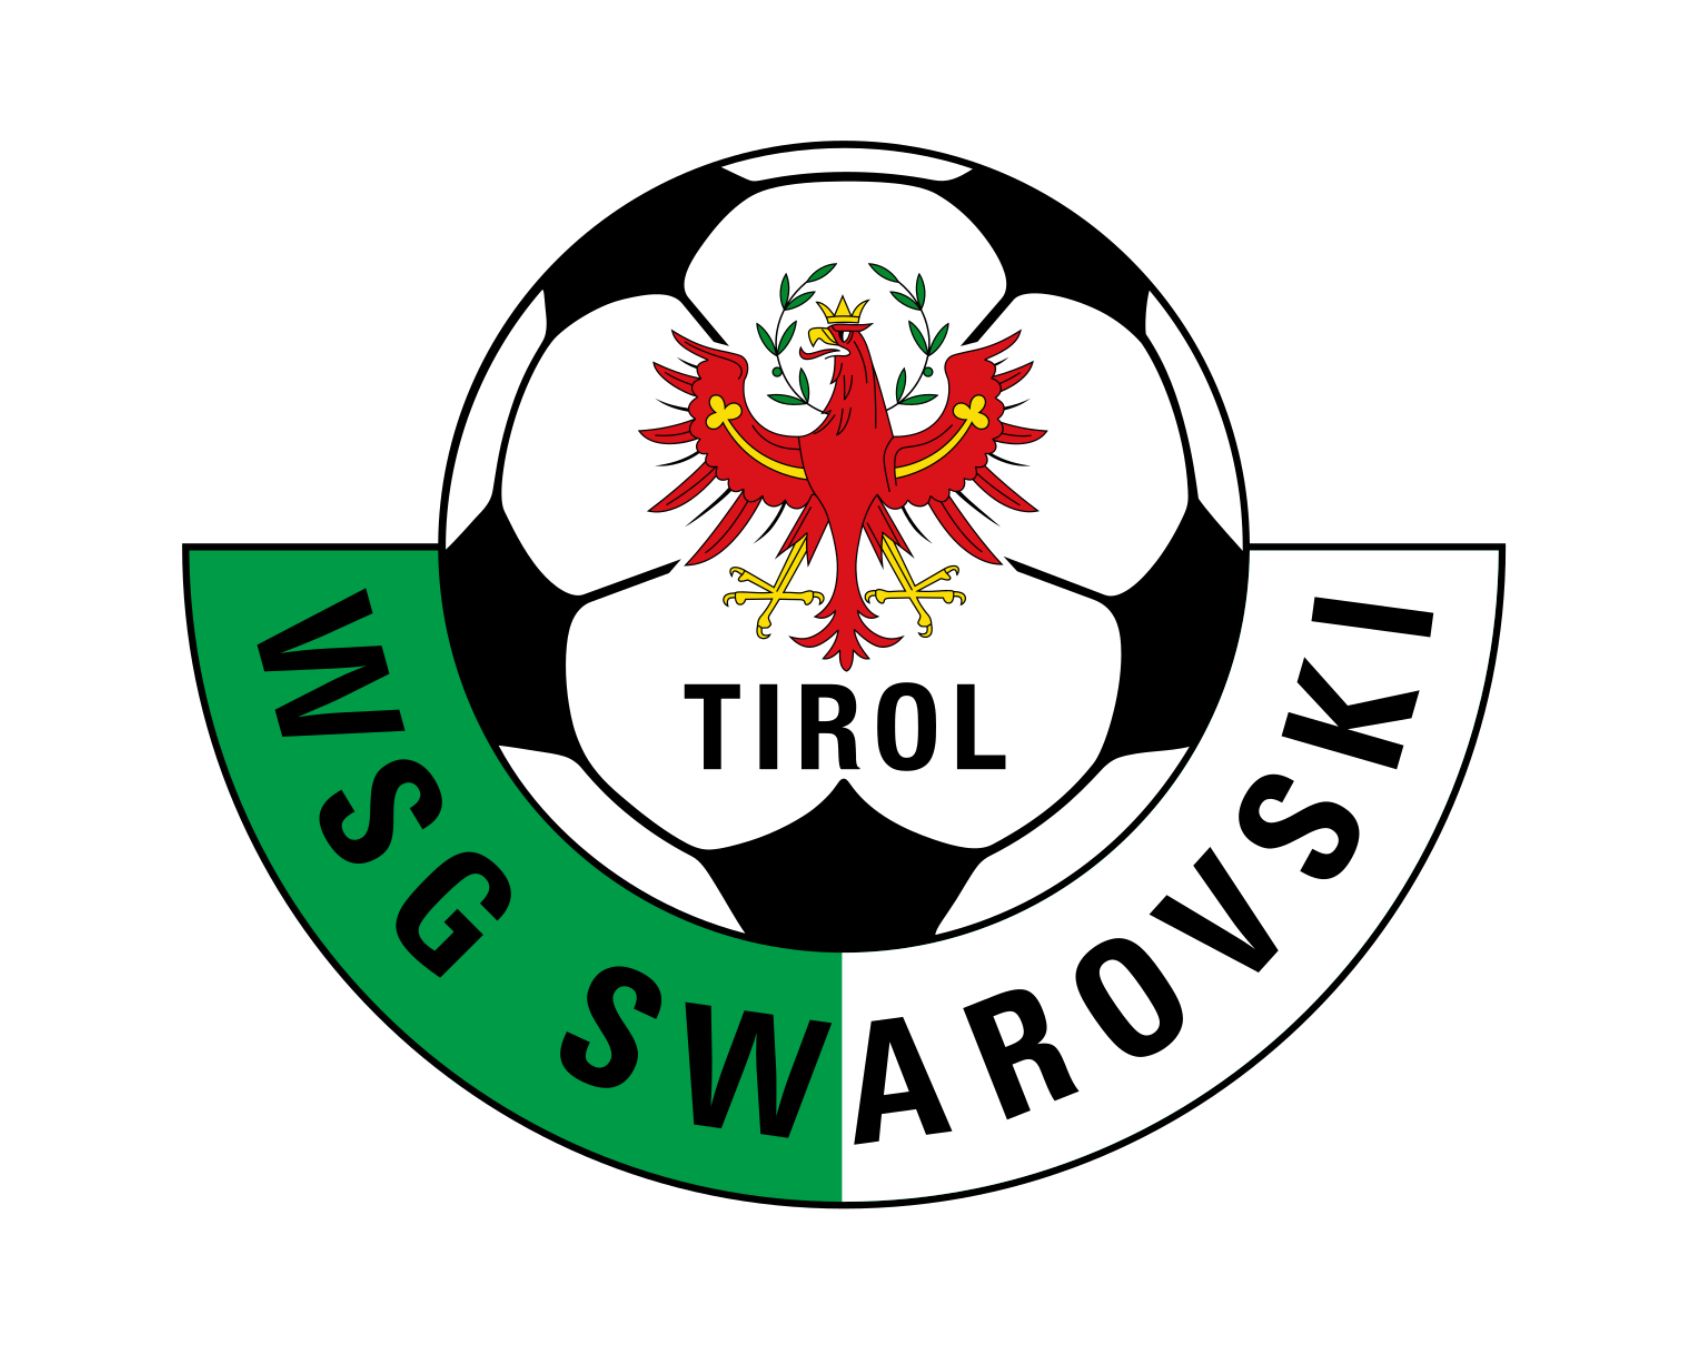 wsg-swarovski-tirol-25-football-club-facts